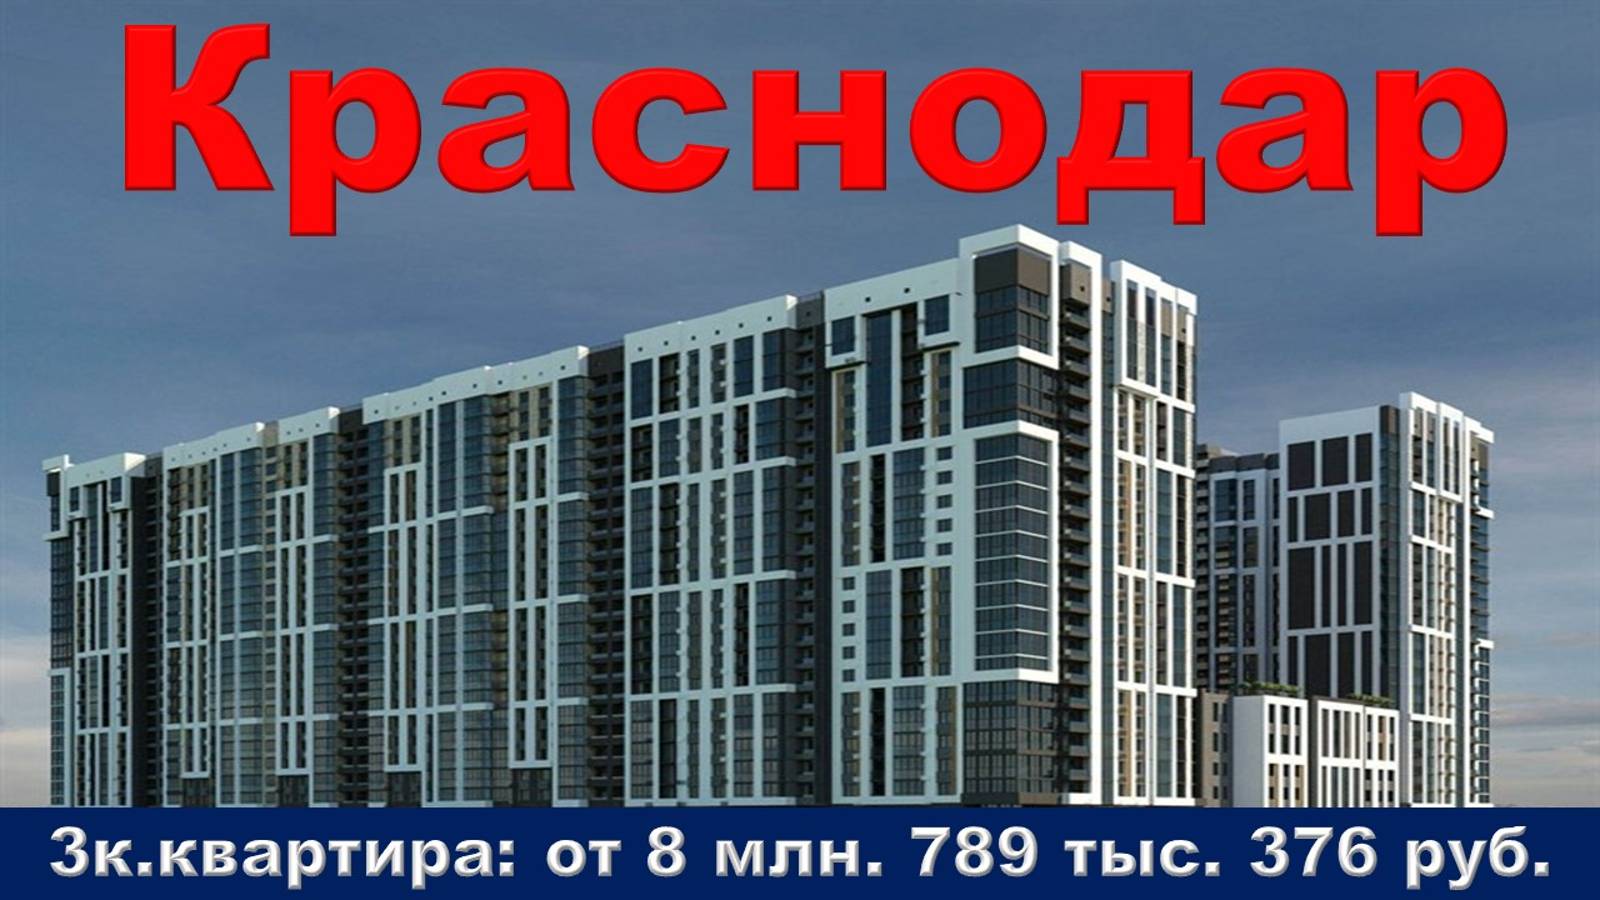 Краснодар. 3к. квартира от 8 млн. 789 тыс. 376 руб.